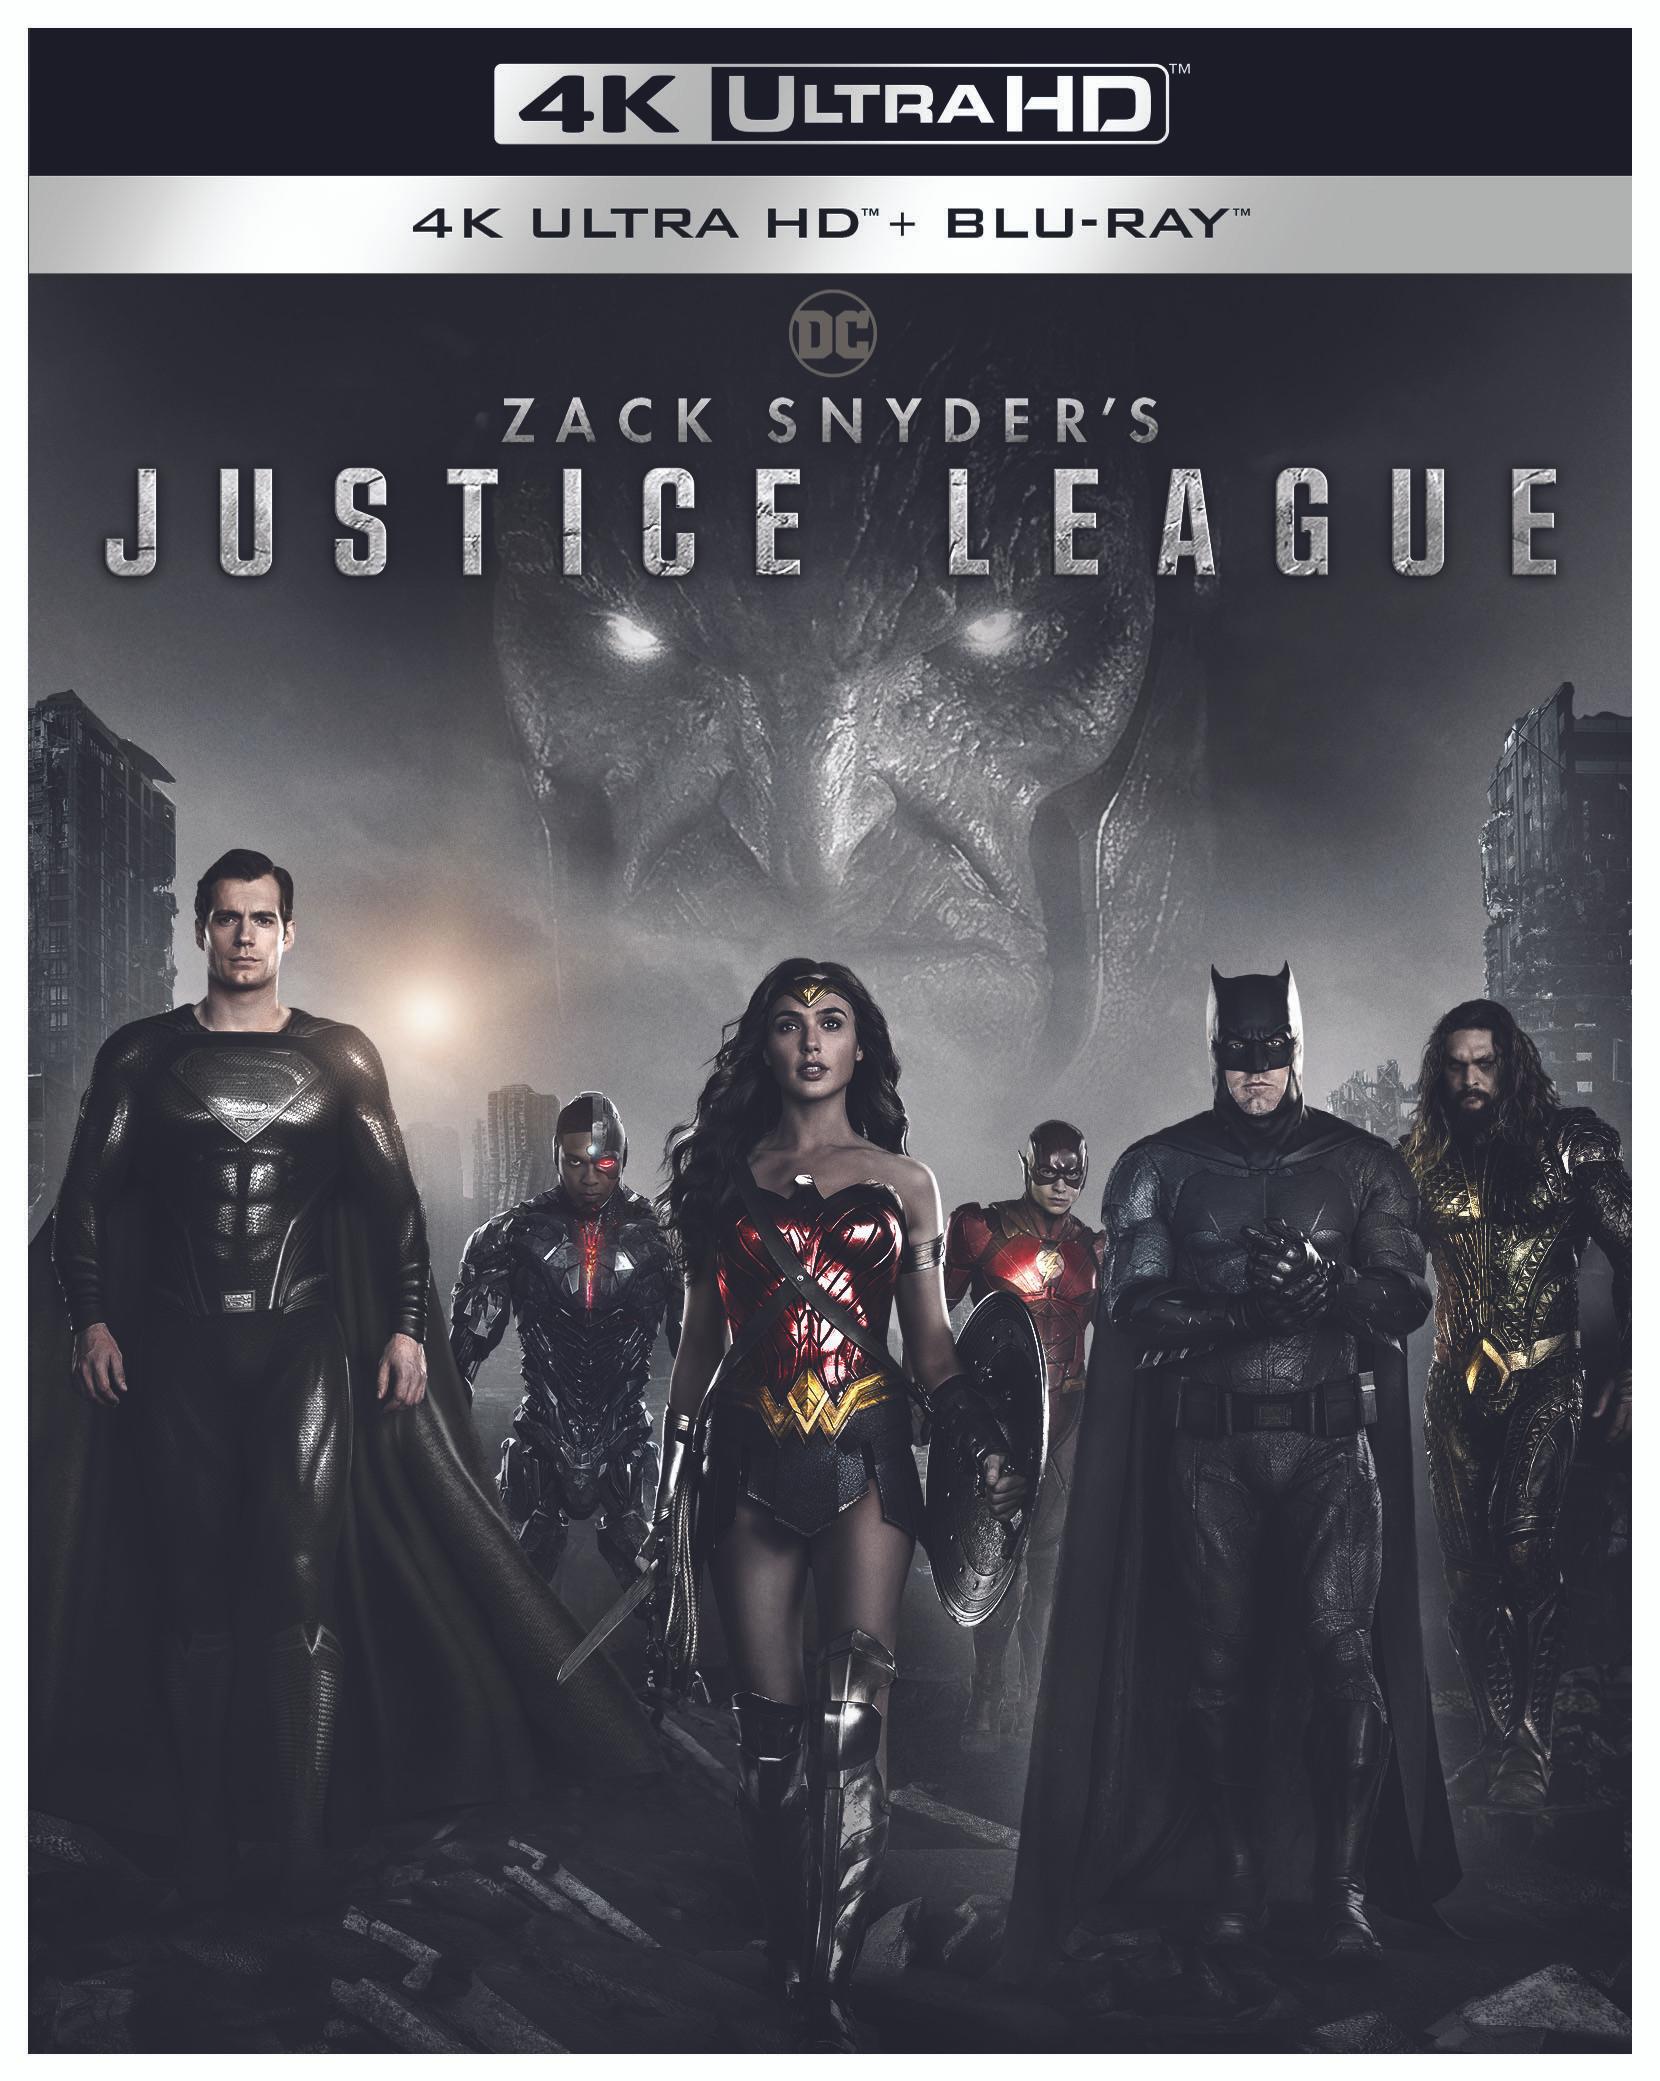 Zack Snyder's Justice League (4K Ultra HD + Blu-ray) - UHD [ 2021 ]  - Action Movies On 4K Ultra HD Blu-ray - Movies On GRUV